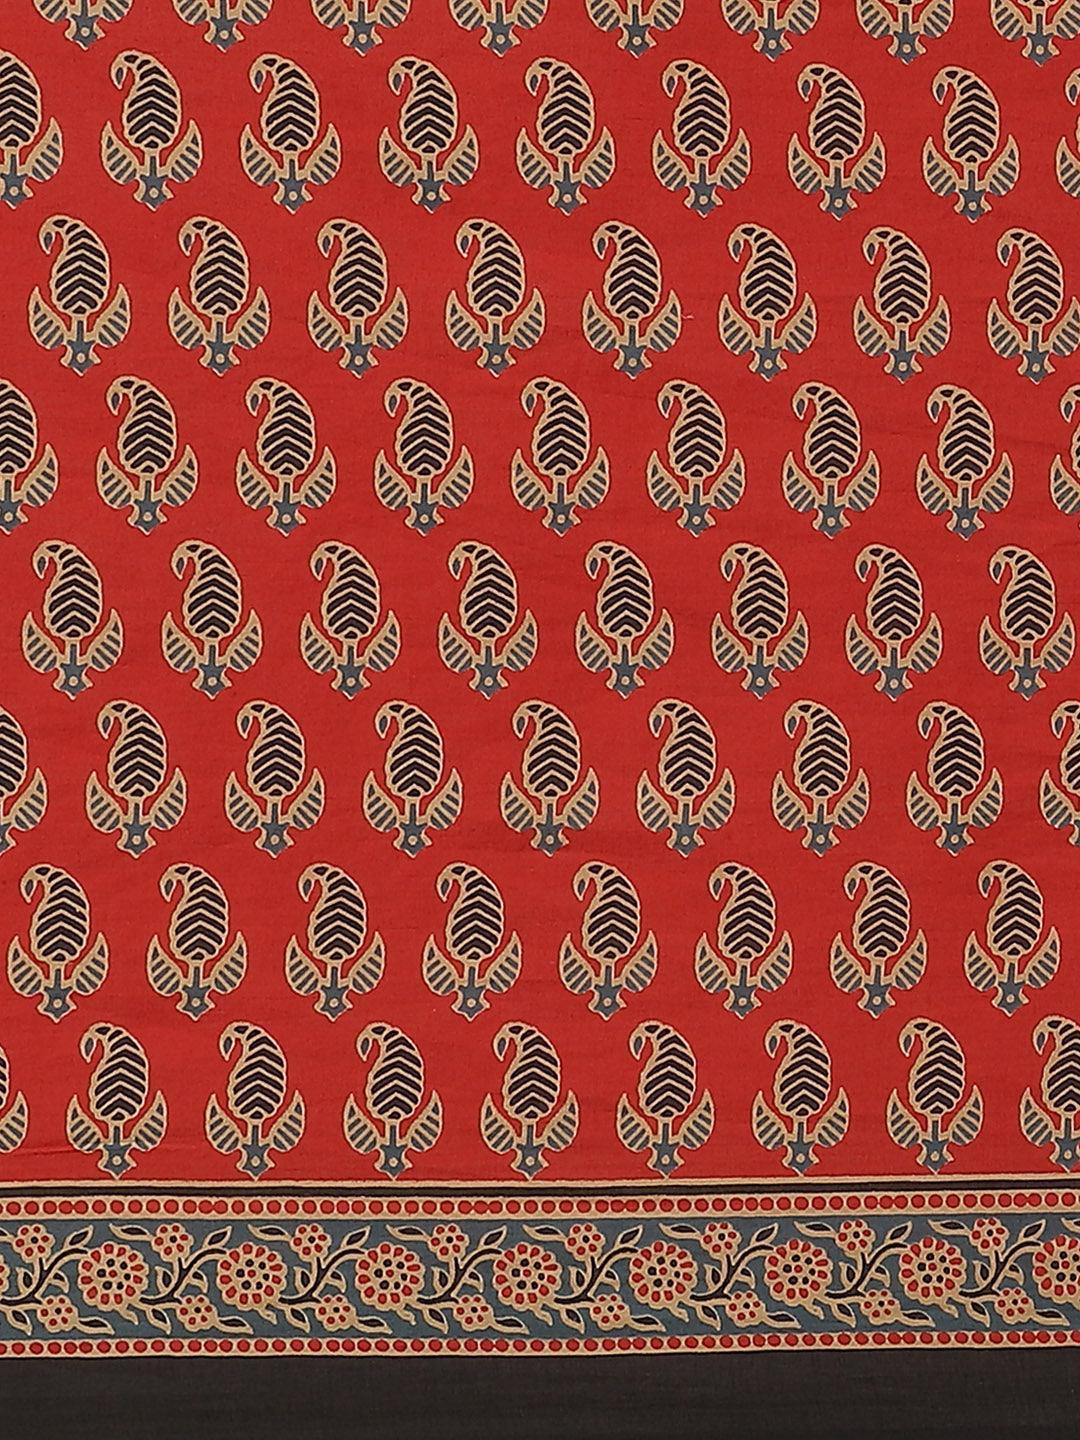 Multicoloured Printed Cotton Saree - ShopLibas